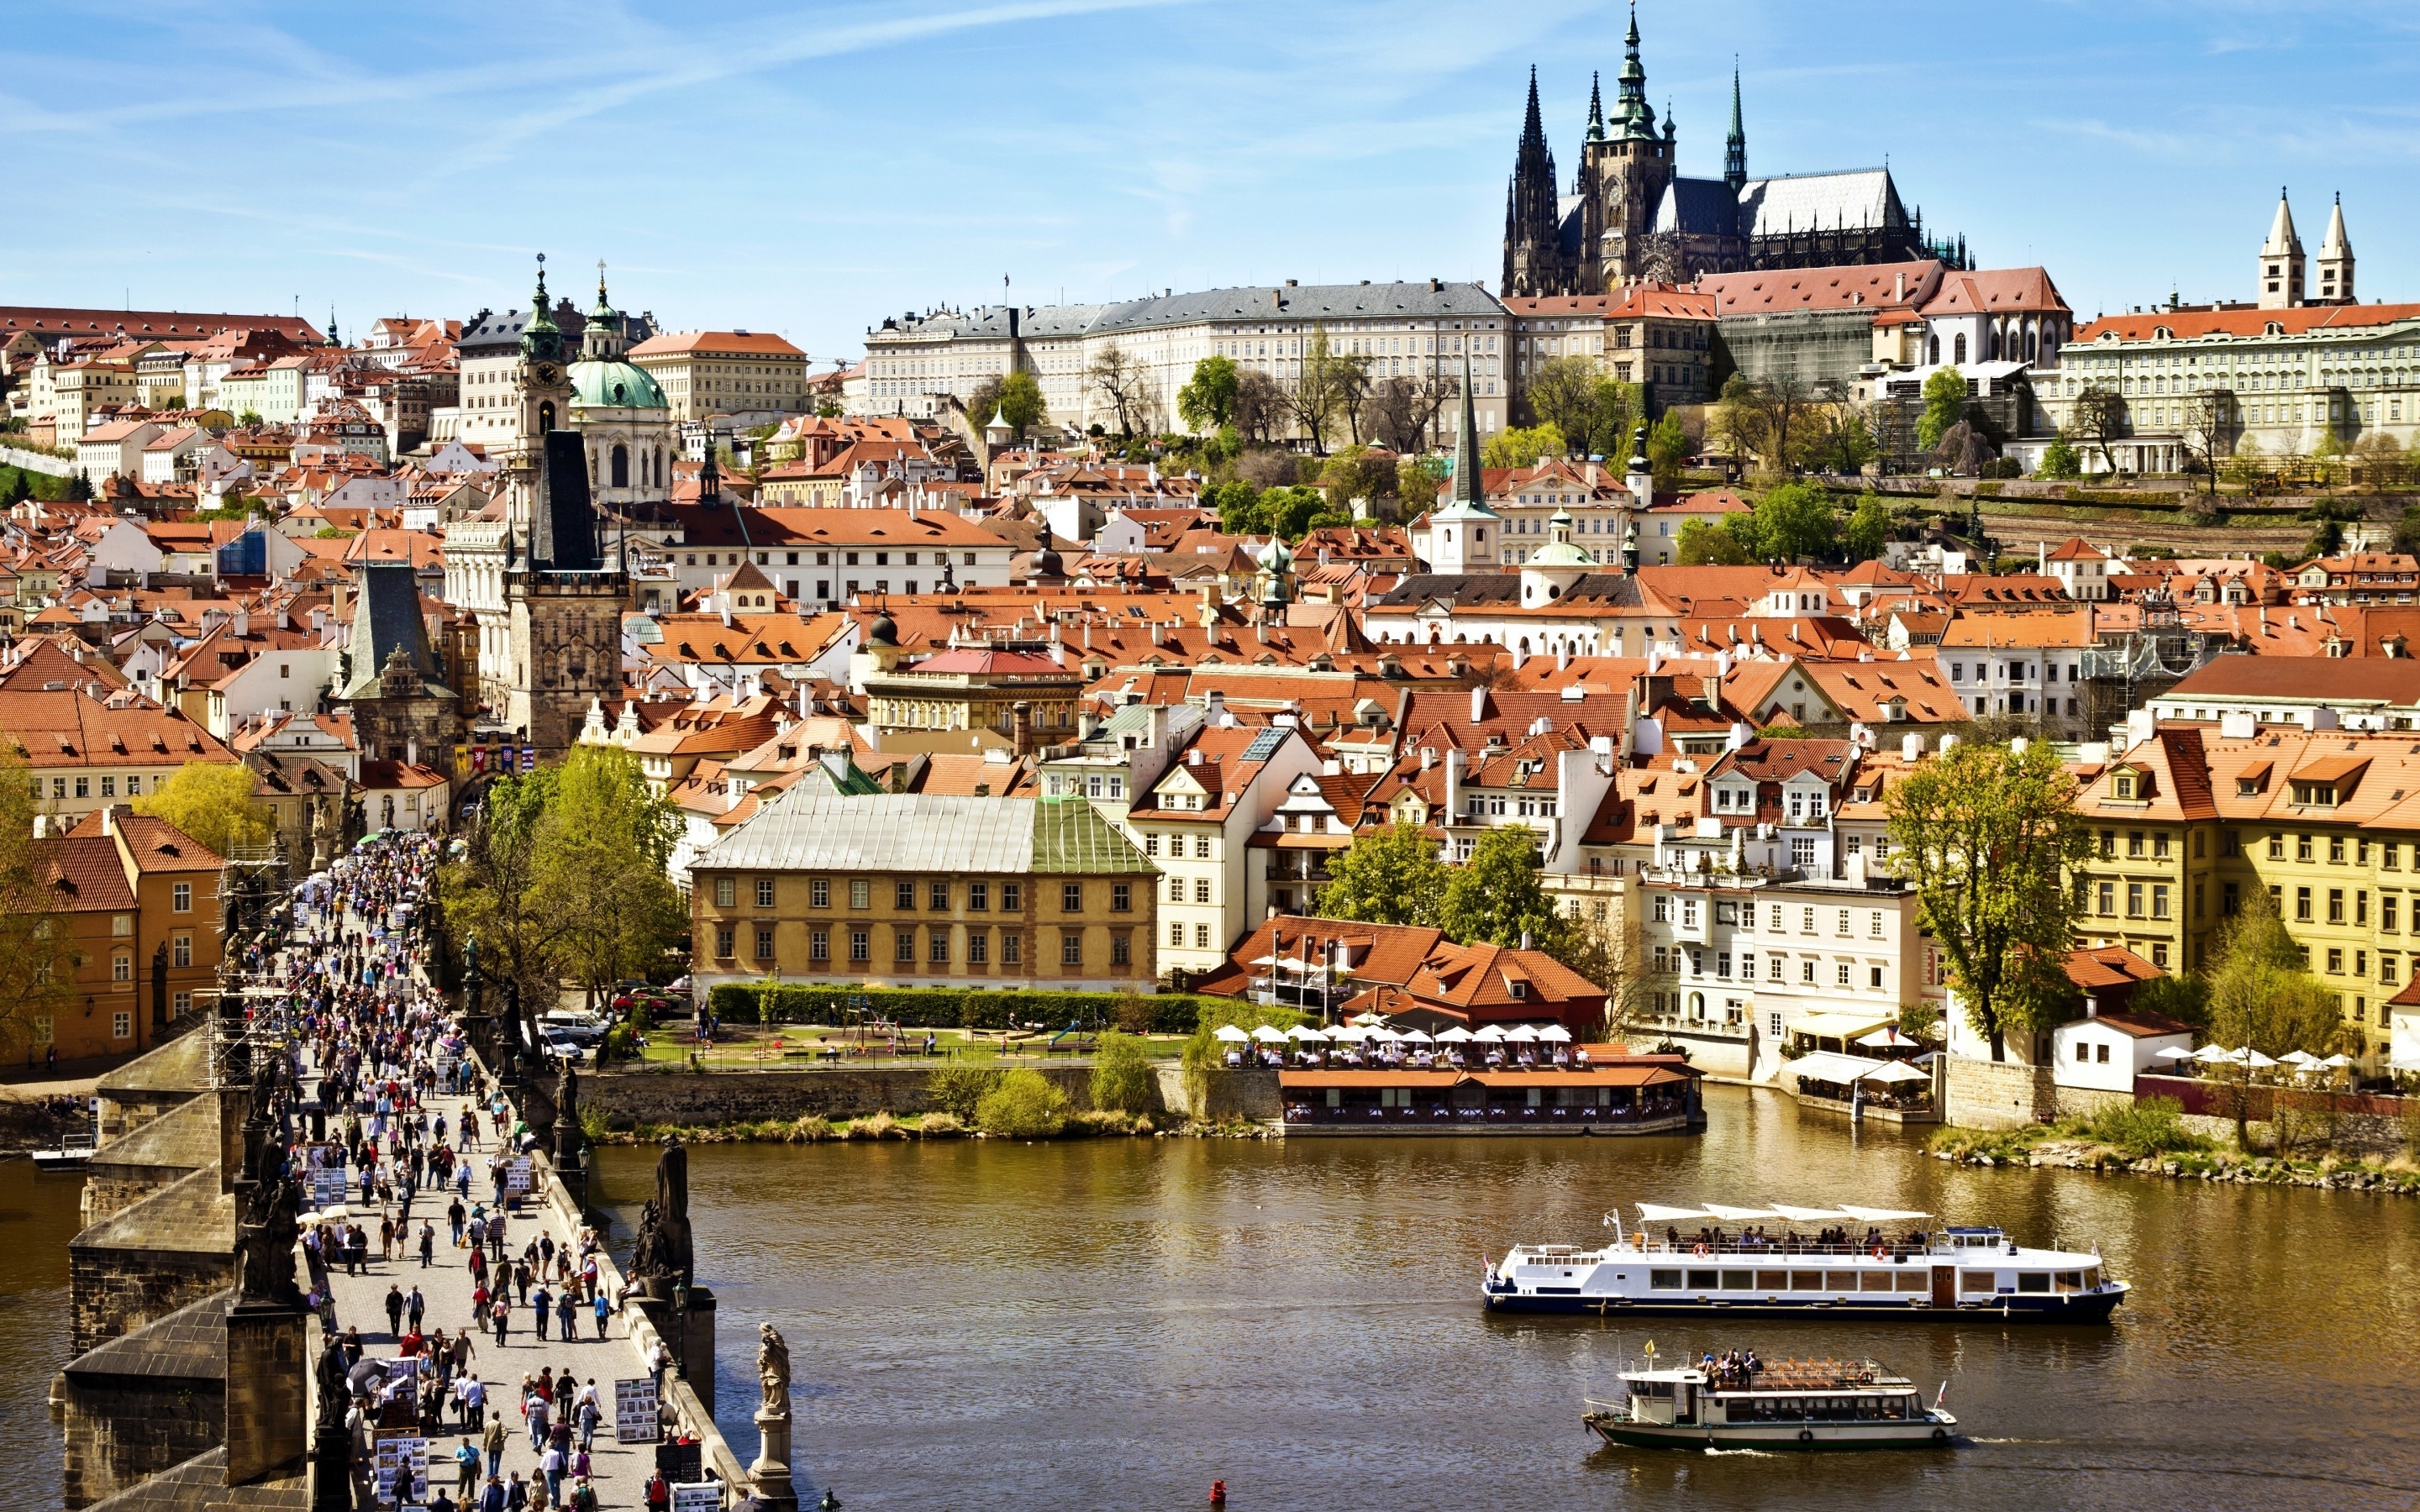 Prague City View for 2880 x 1800 Retina Display resolution